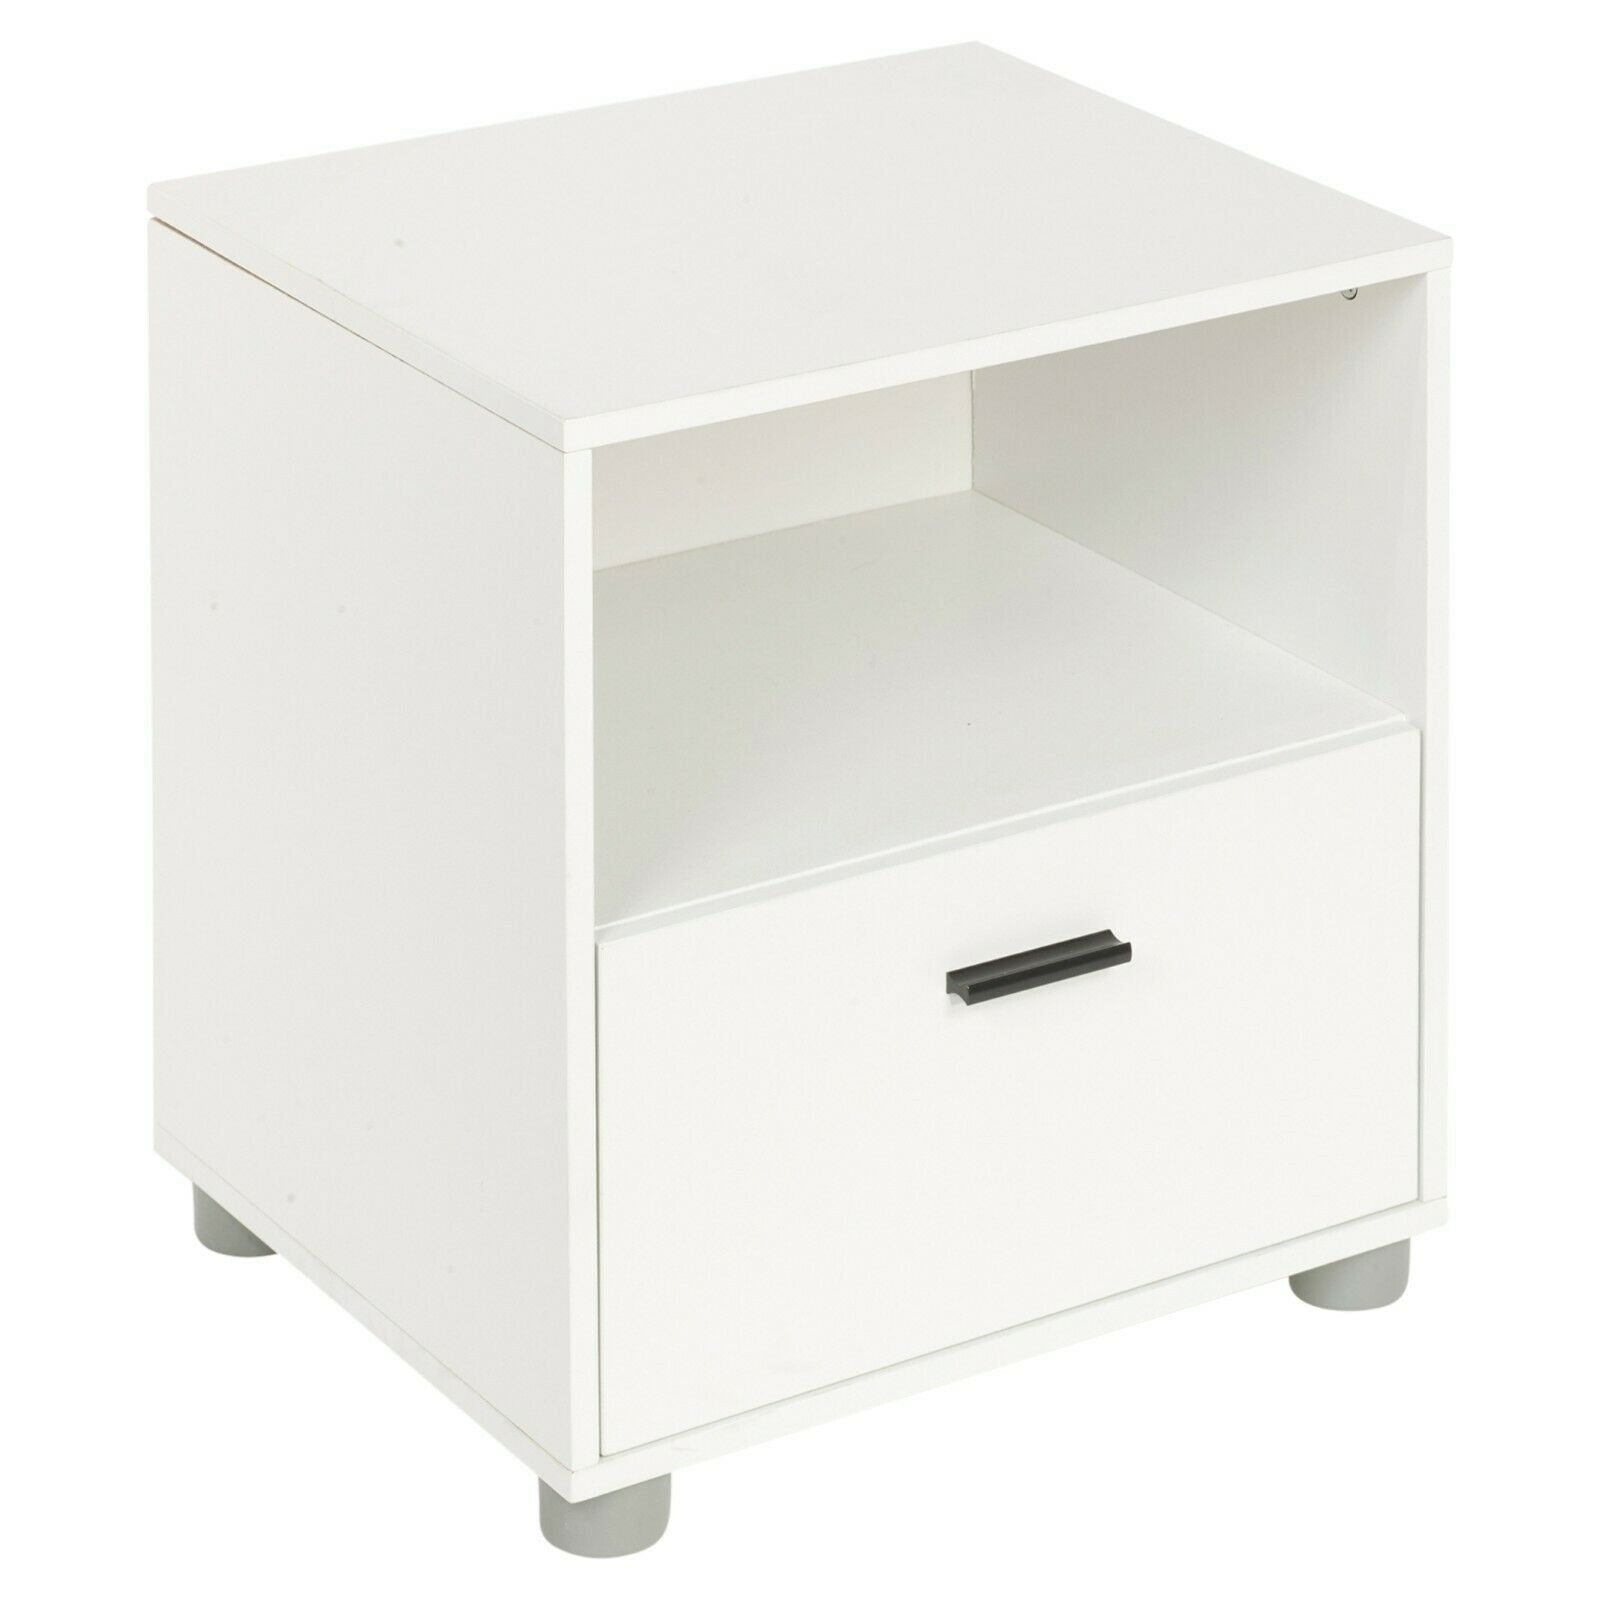 1 Or 2 Drawer Wooden Bedside Table Cabinet Bedroom Furniture Storage Nightstand